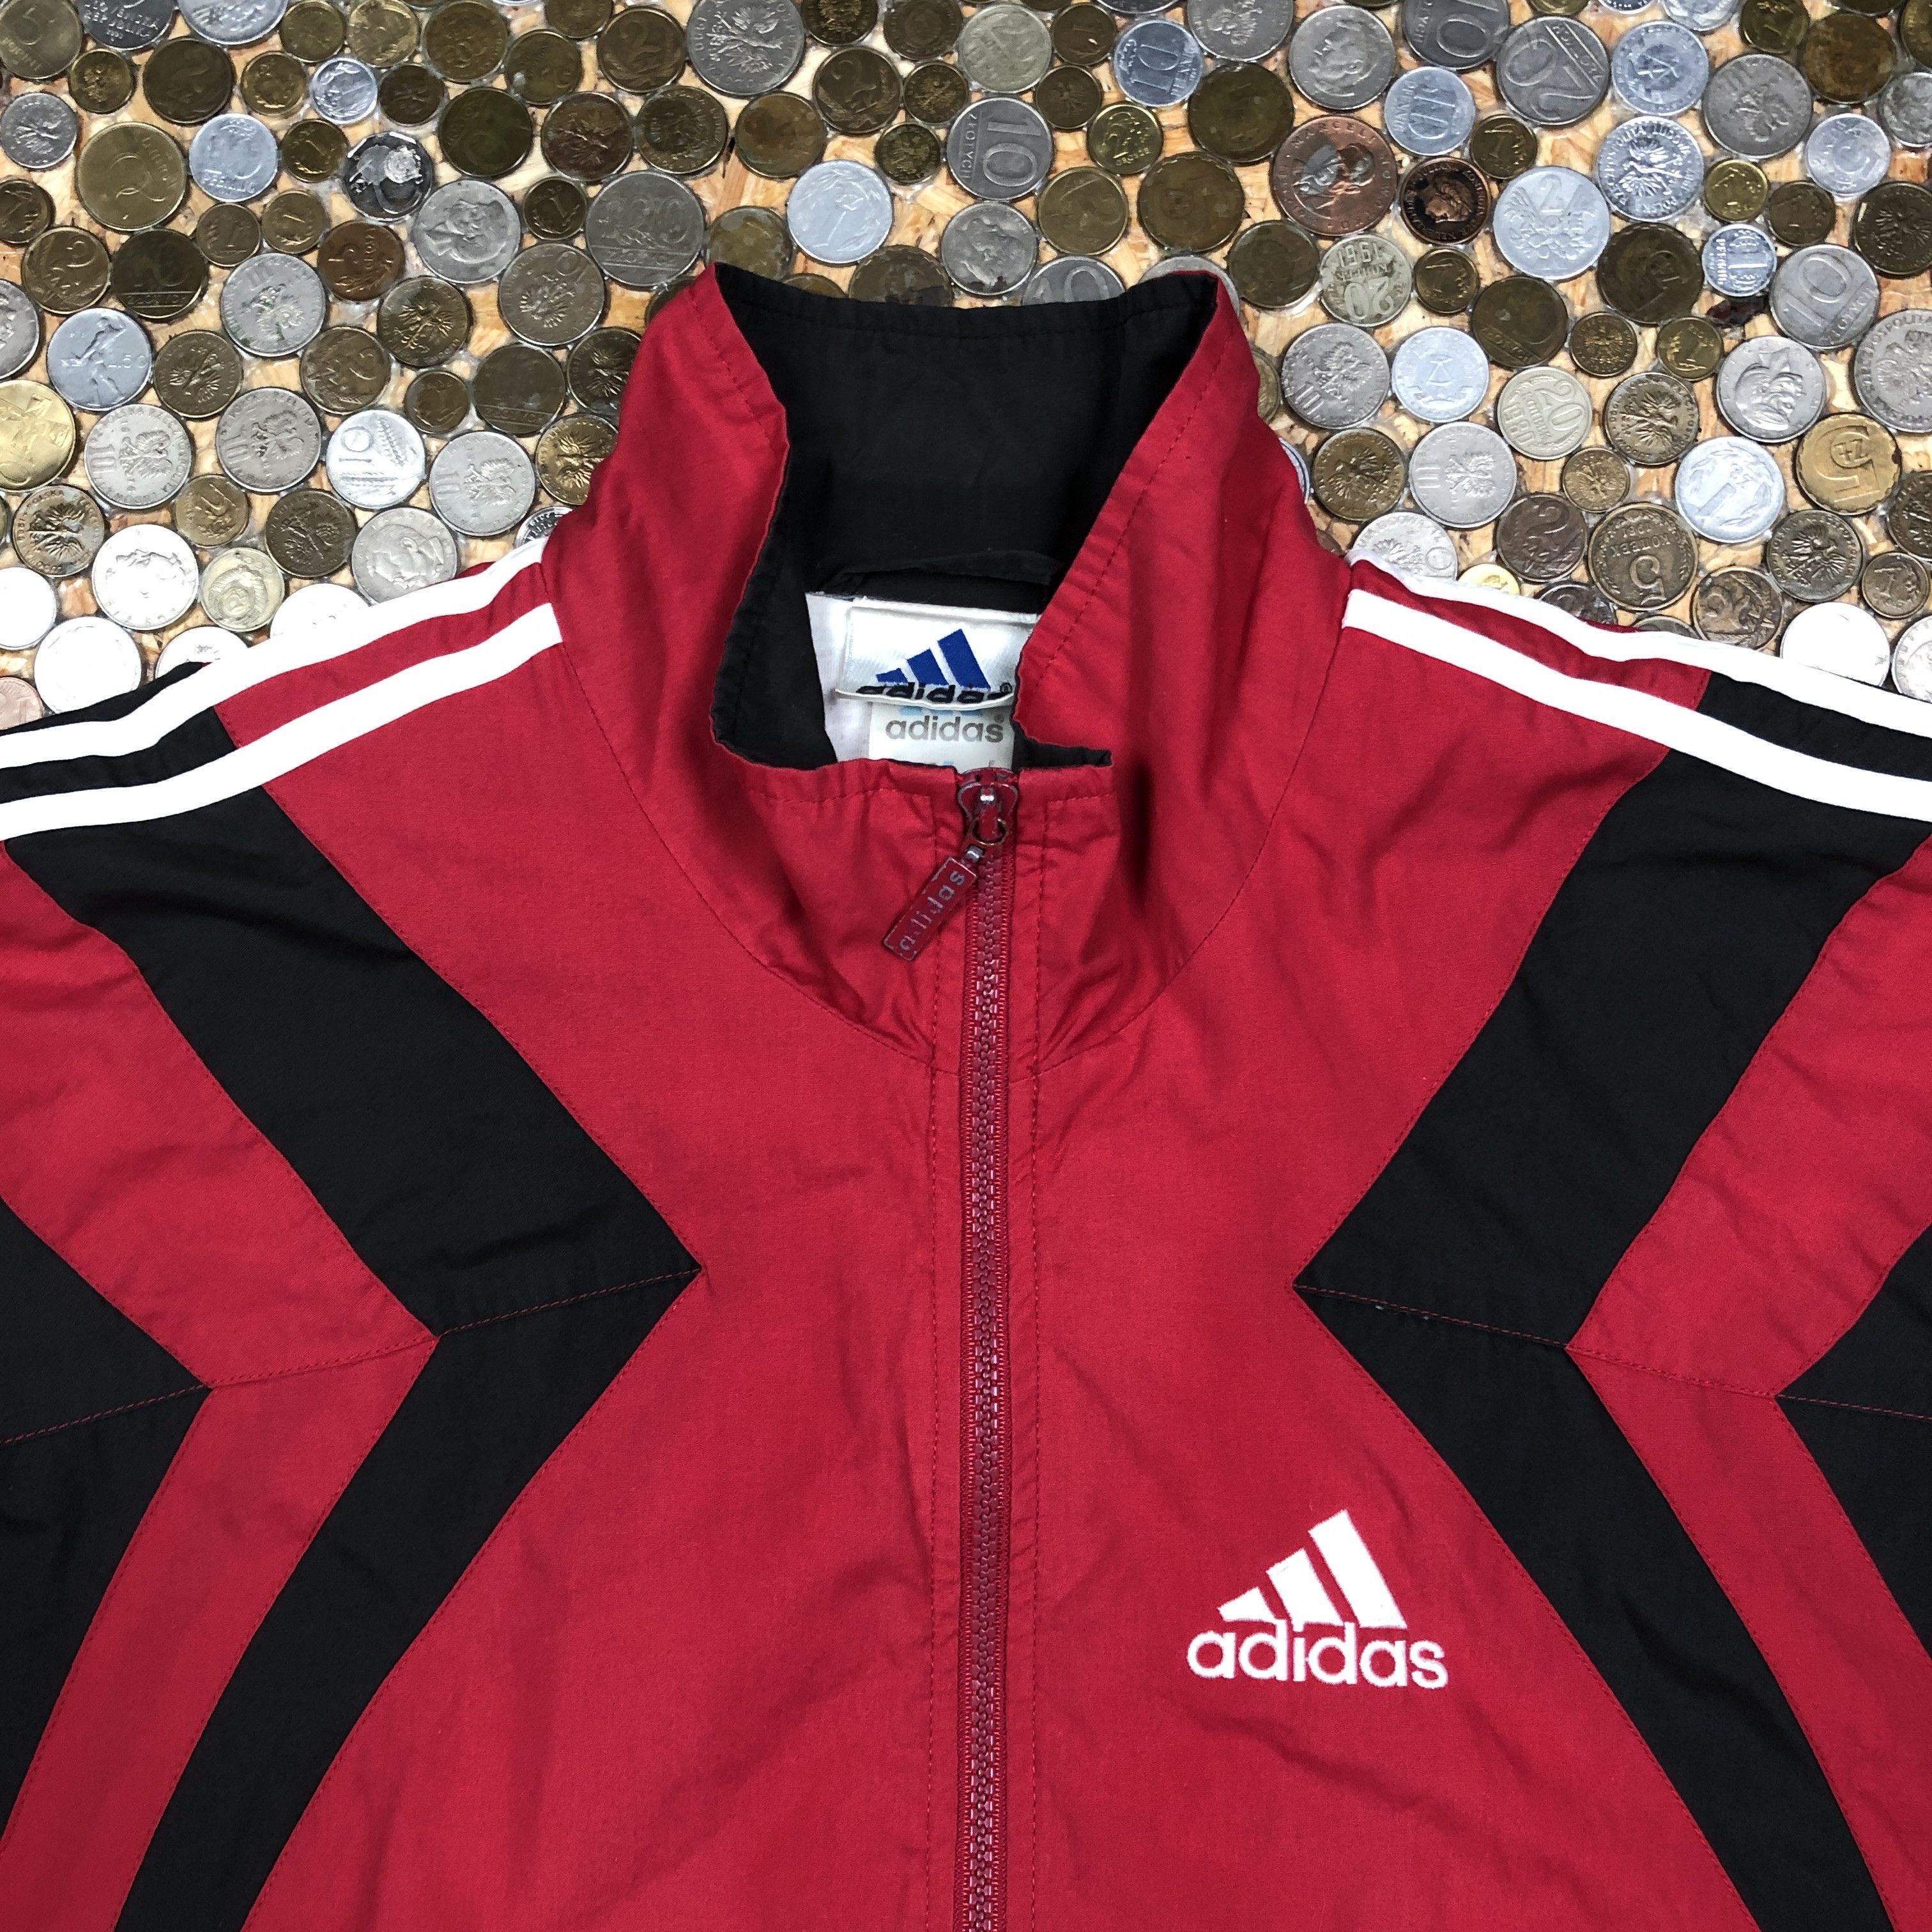 Adidas Adidas Vintage zip sweatshirt tracksuit 90's Size US M / EU 48-50 / 2 - 2 Preview